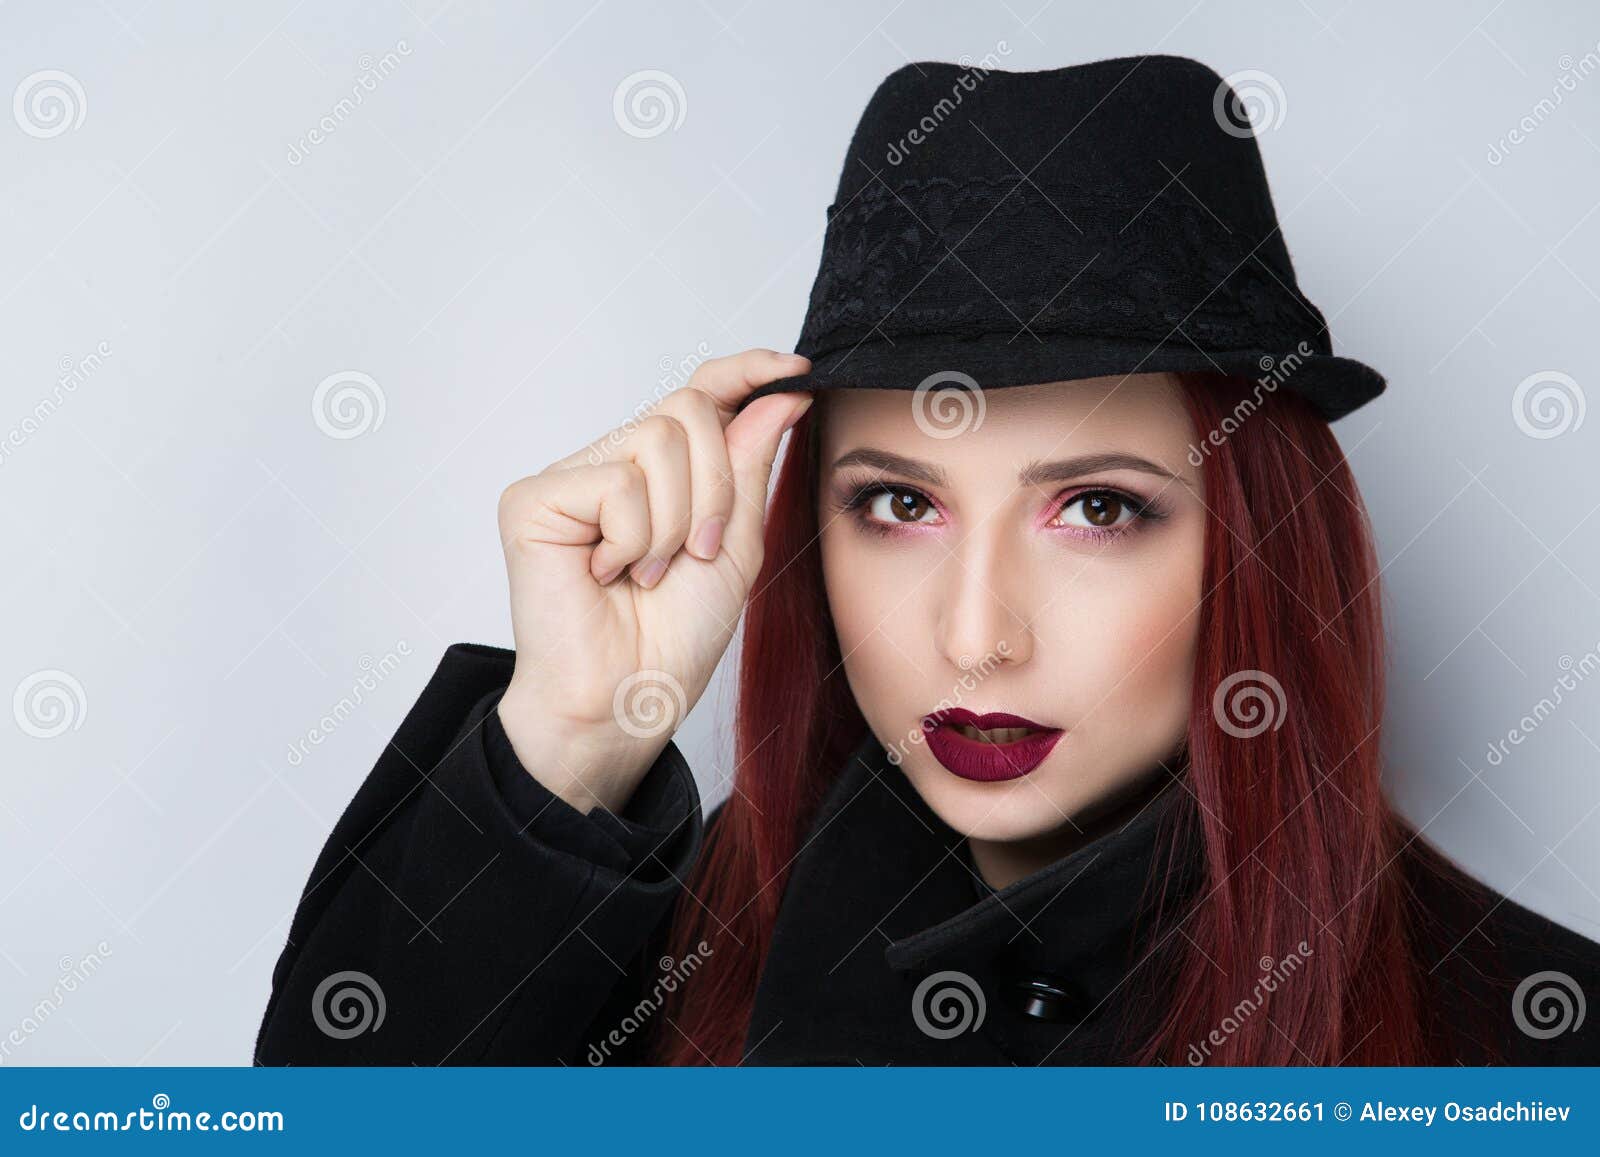 Woman black hat stock image. Image of airport, flight - 108632661